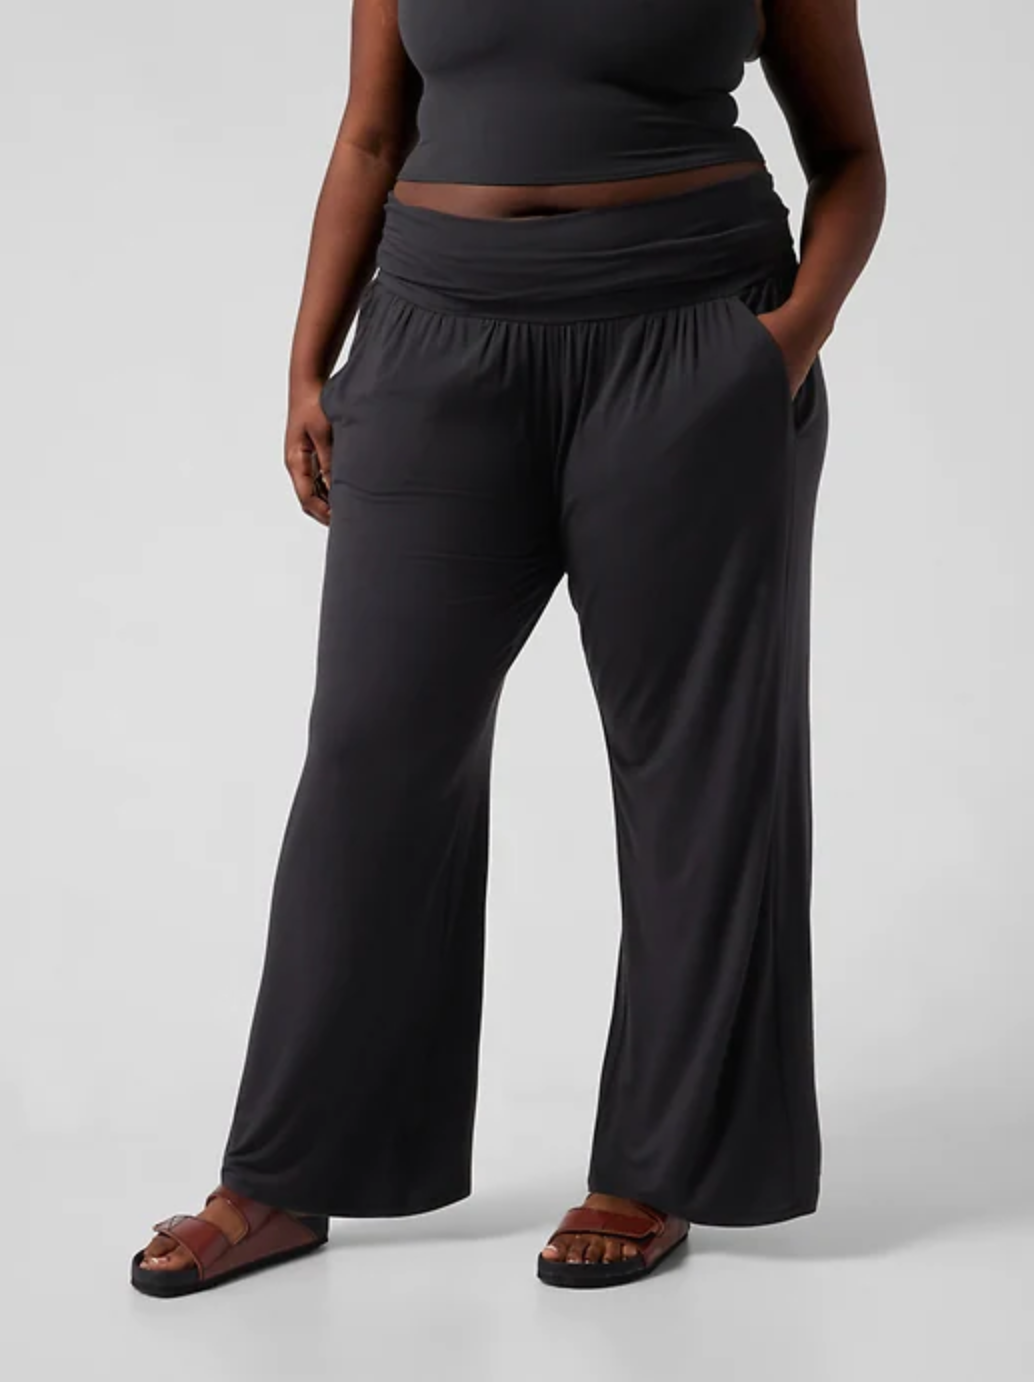 Athleta Lysse Womens Black Side Zip High Waisted Skinny Leg Pants Size -  Shop Linda's Stuff